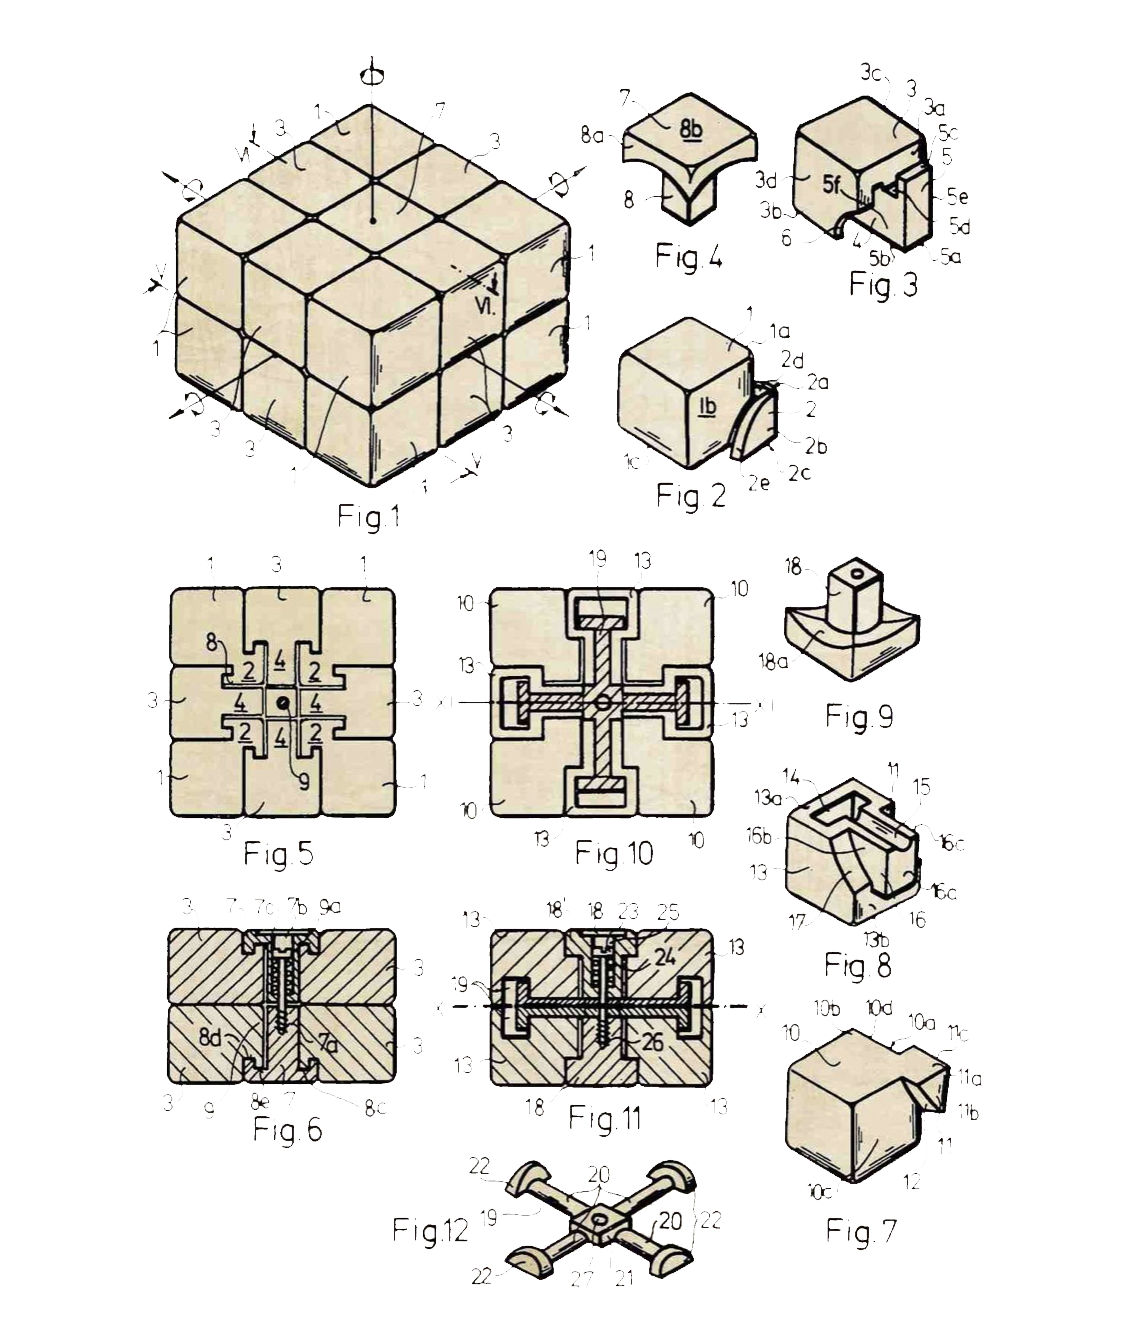 Rubik's Cube Patent Short-Sleeve T-Shirt